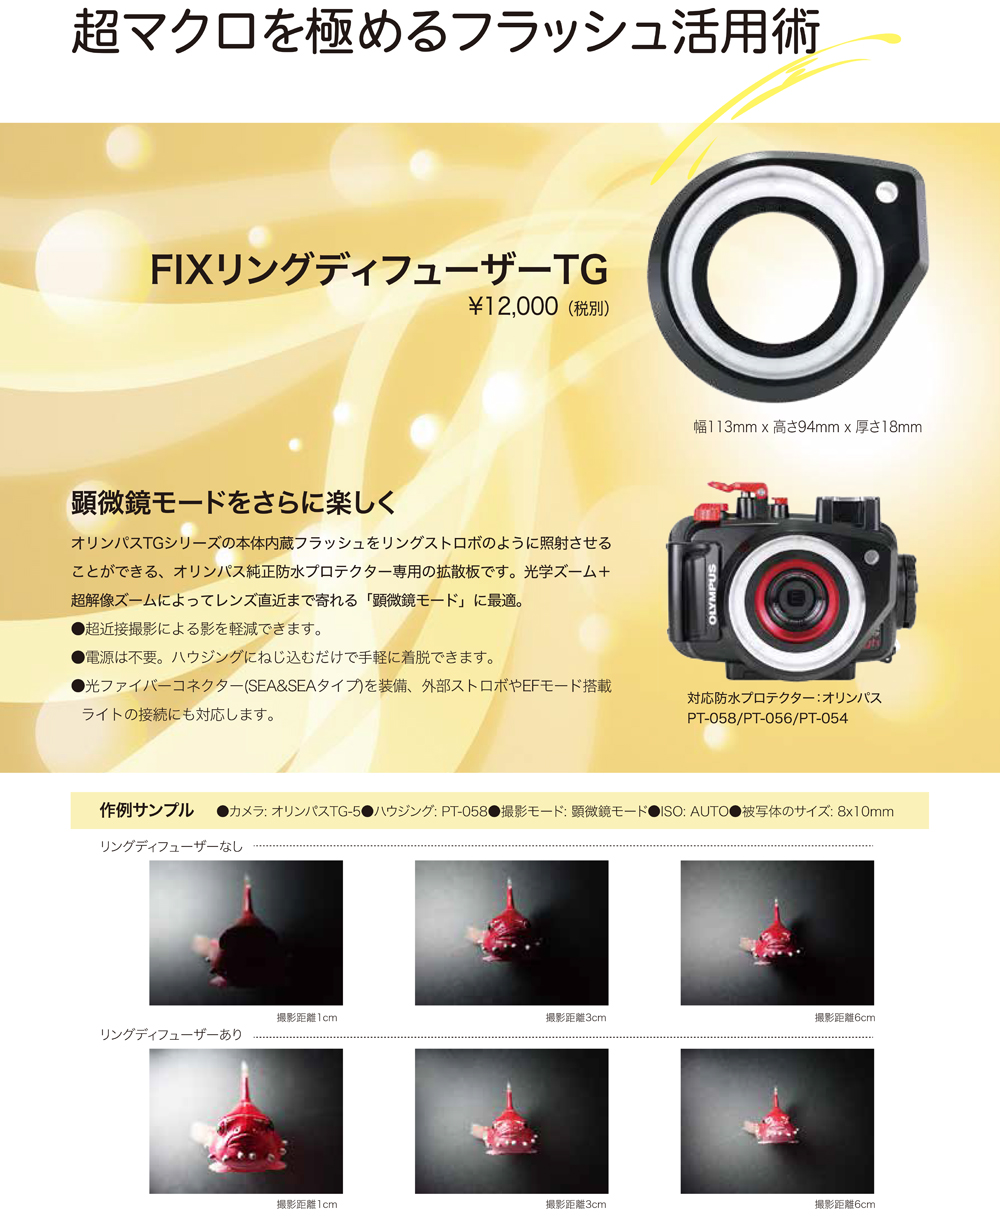 Olympus Tgシリーズ用 Fixリングディフューザーtg 激安 ダイビング器材 水中カメラ用品販売東京 アクオス